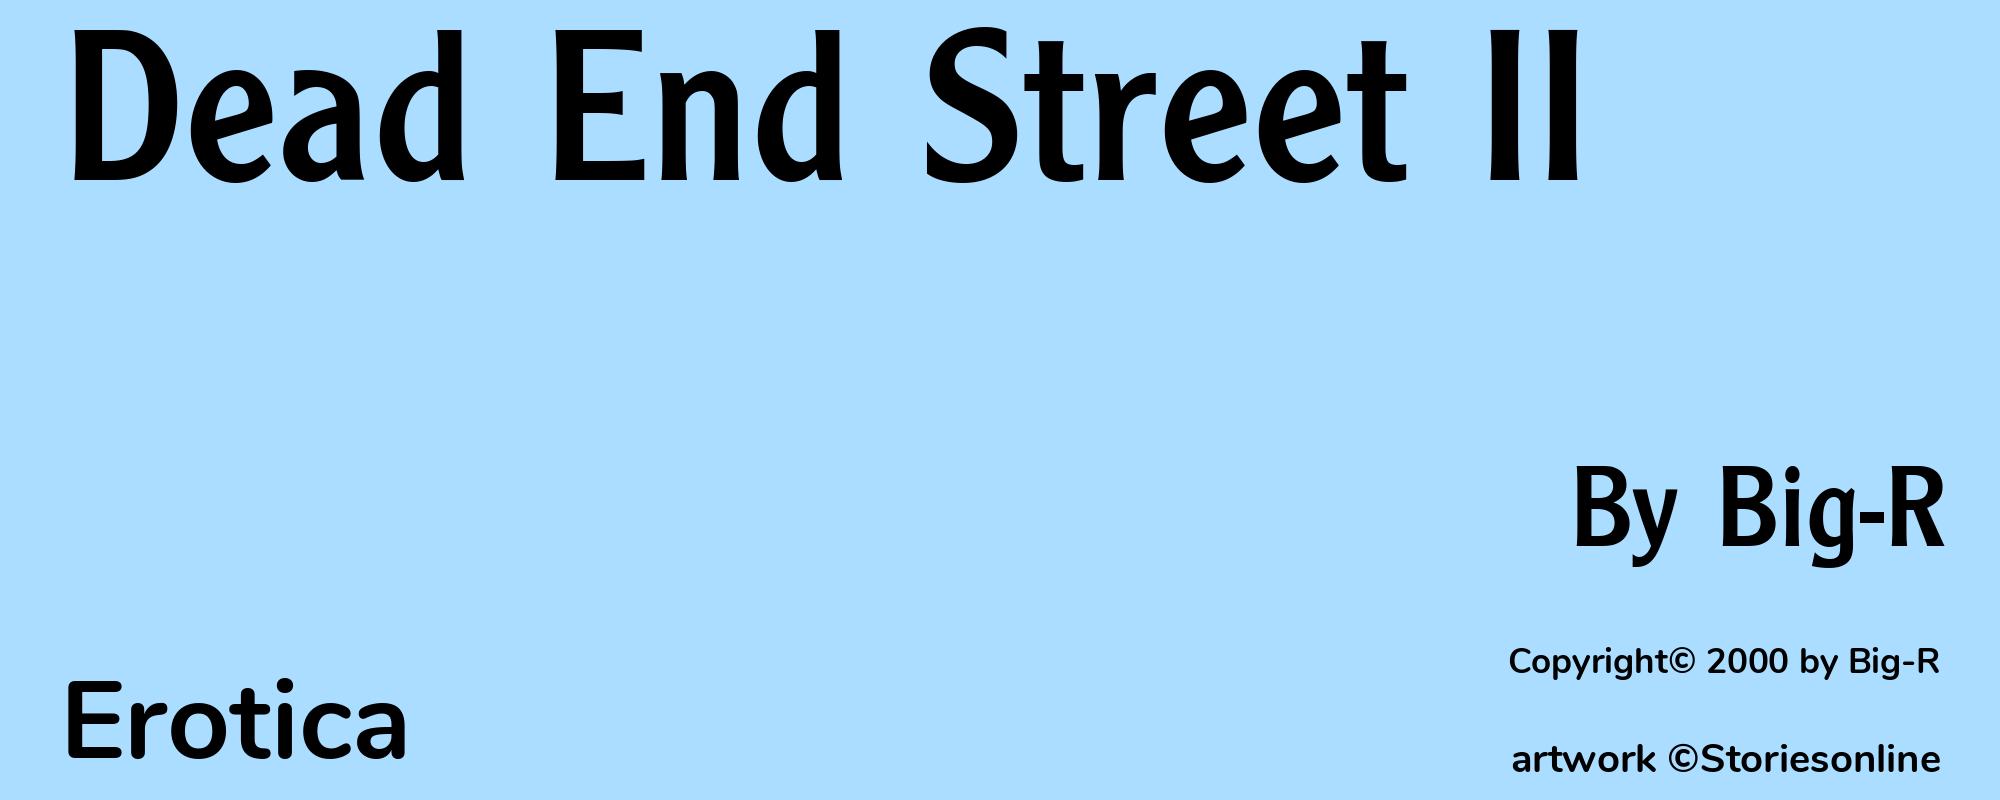 Dead End Street II - Cover